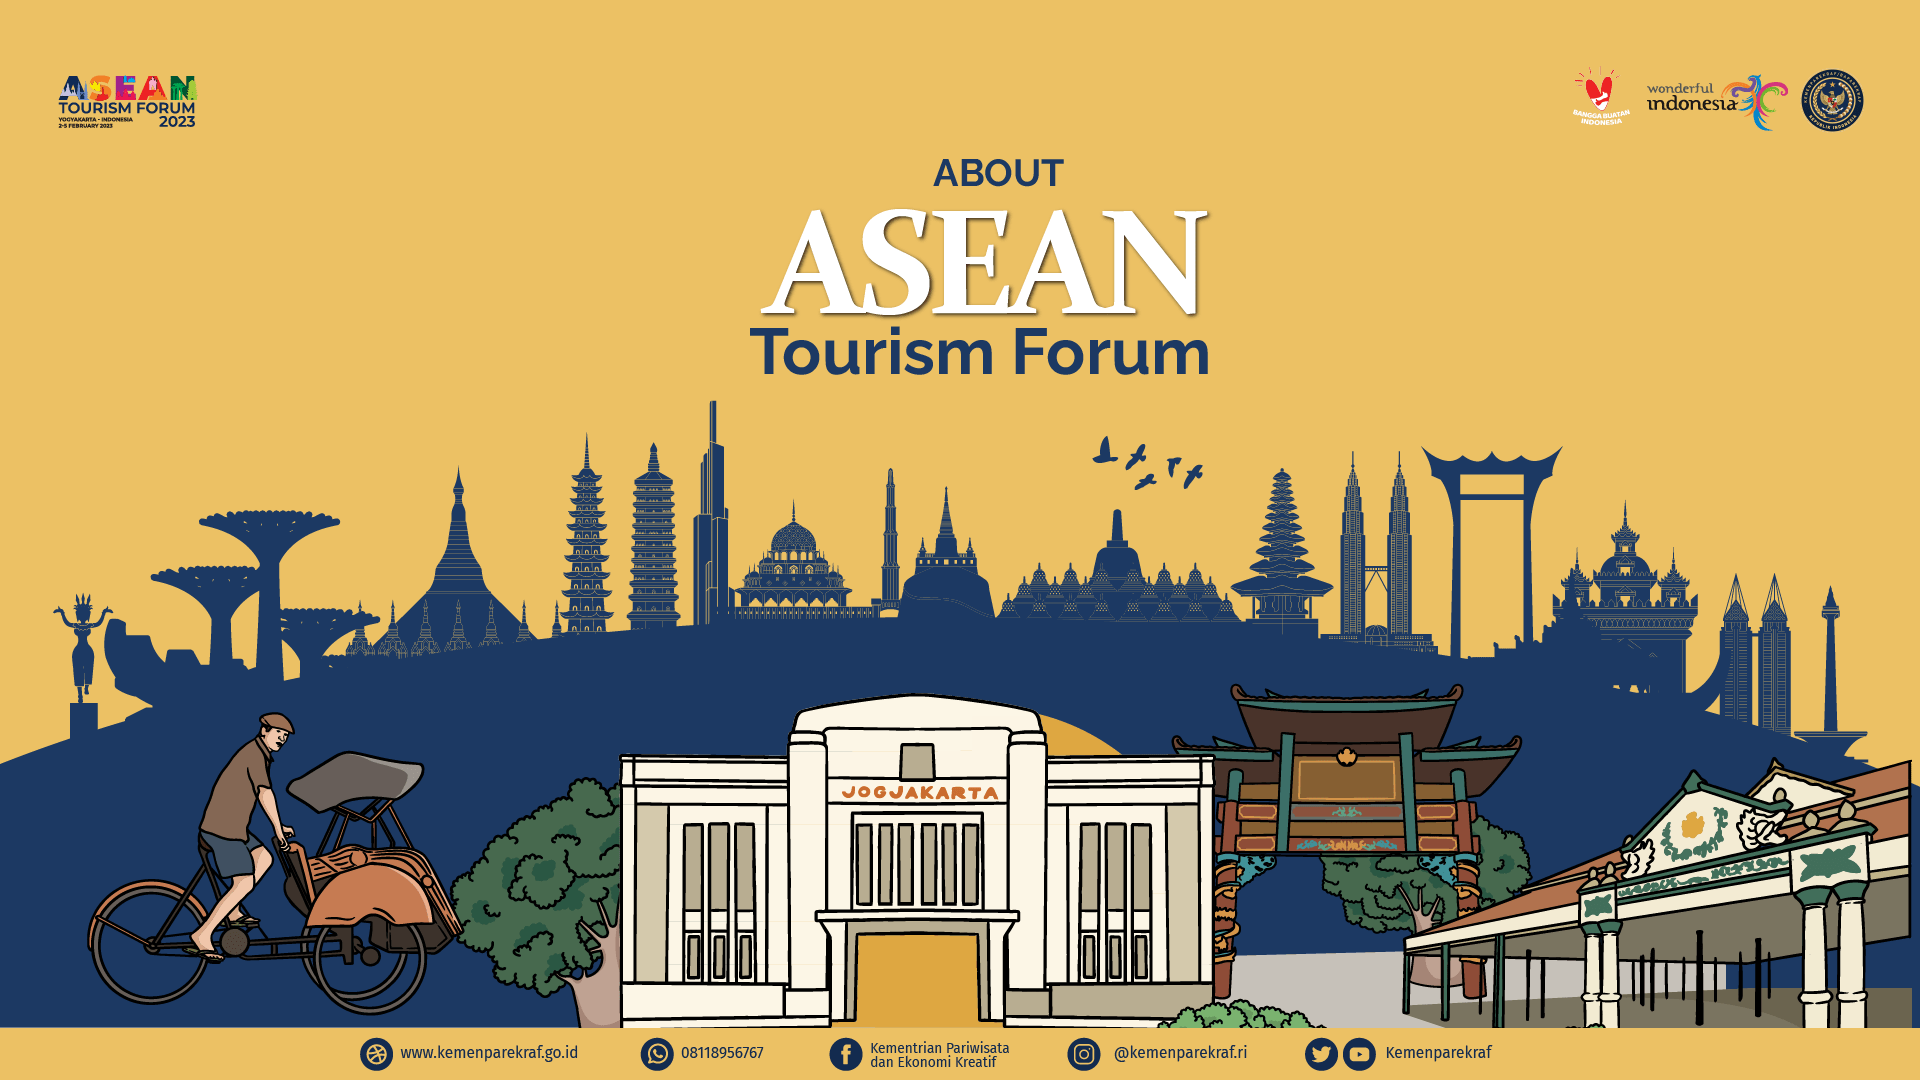 About ASEAN Tourism Forum